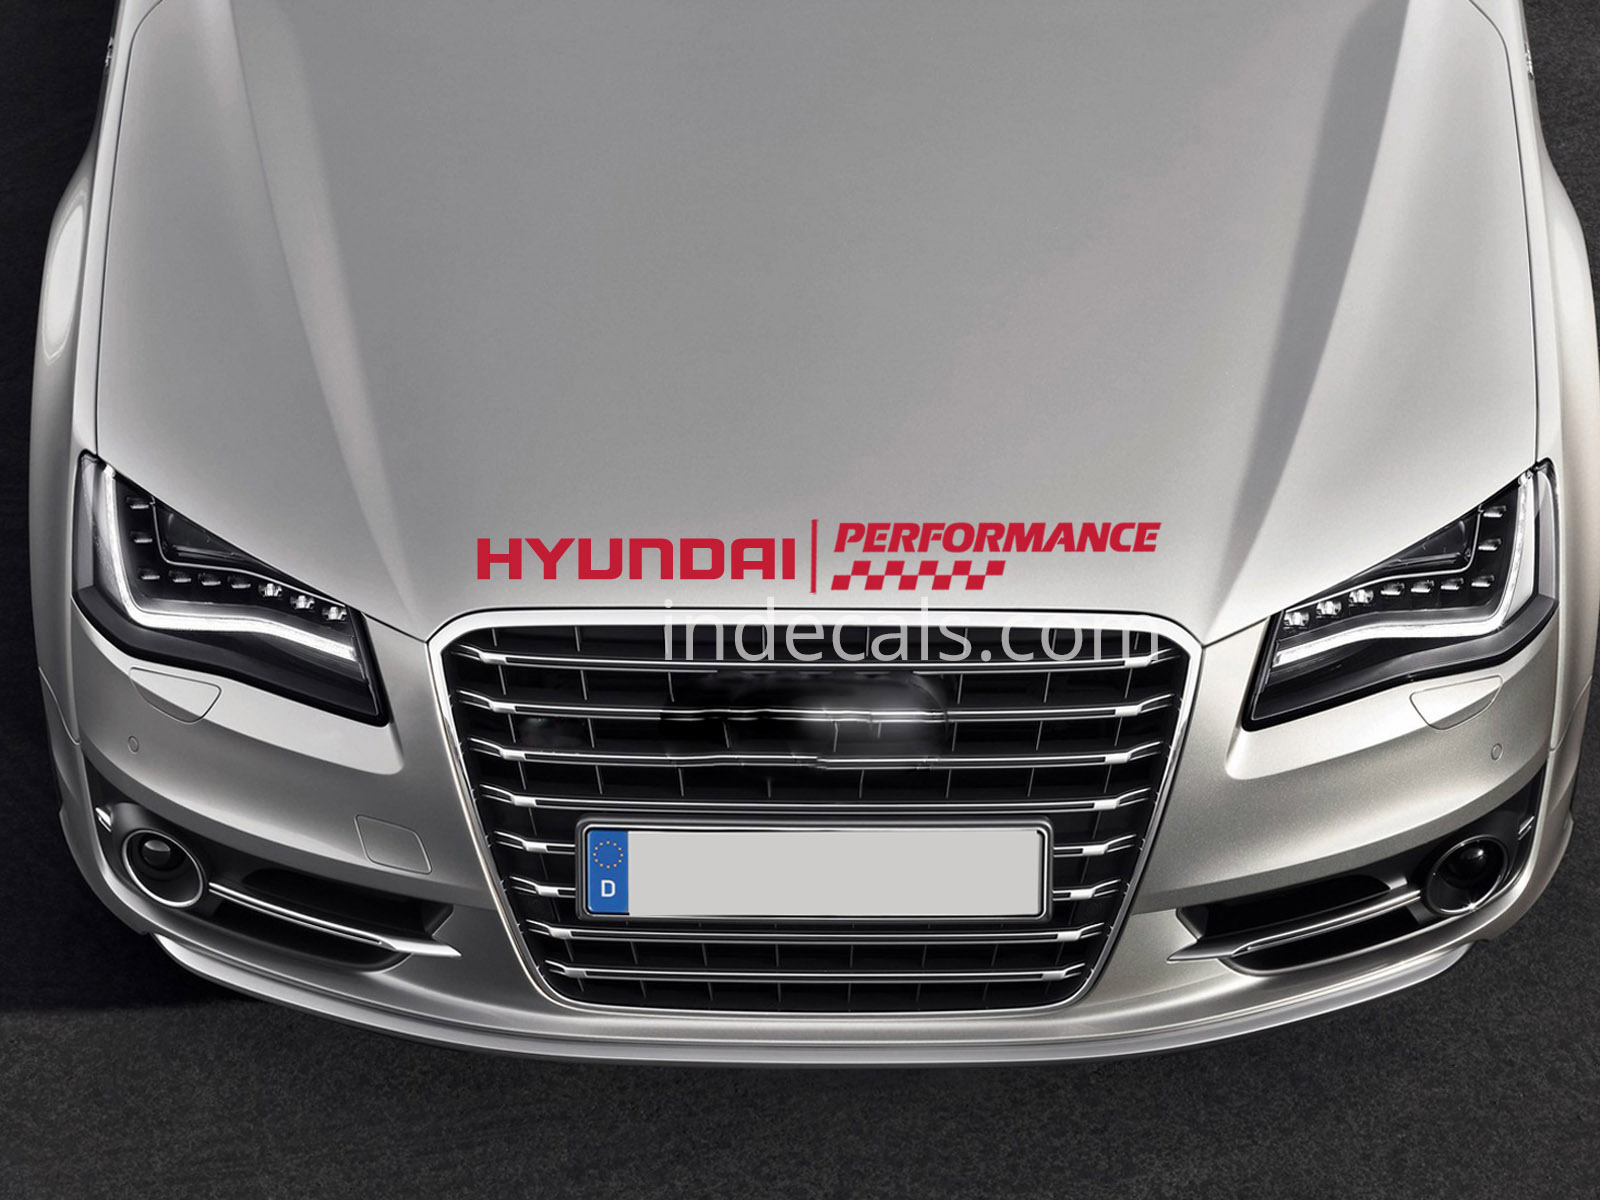 1 x Hyundai Performance Sticker for Bonnet - Red